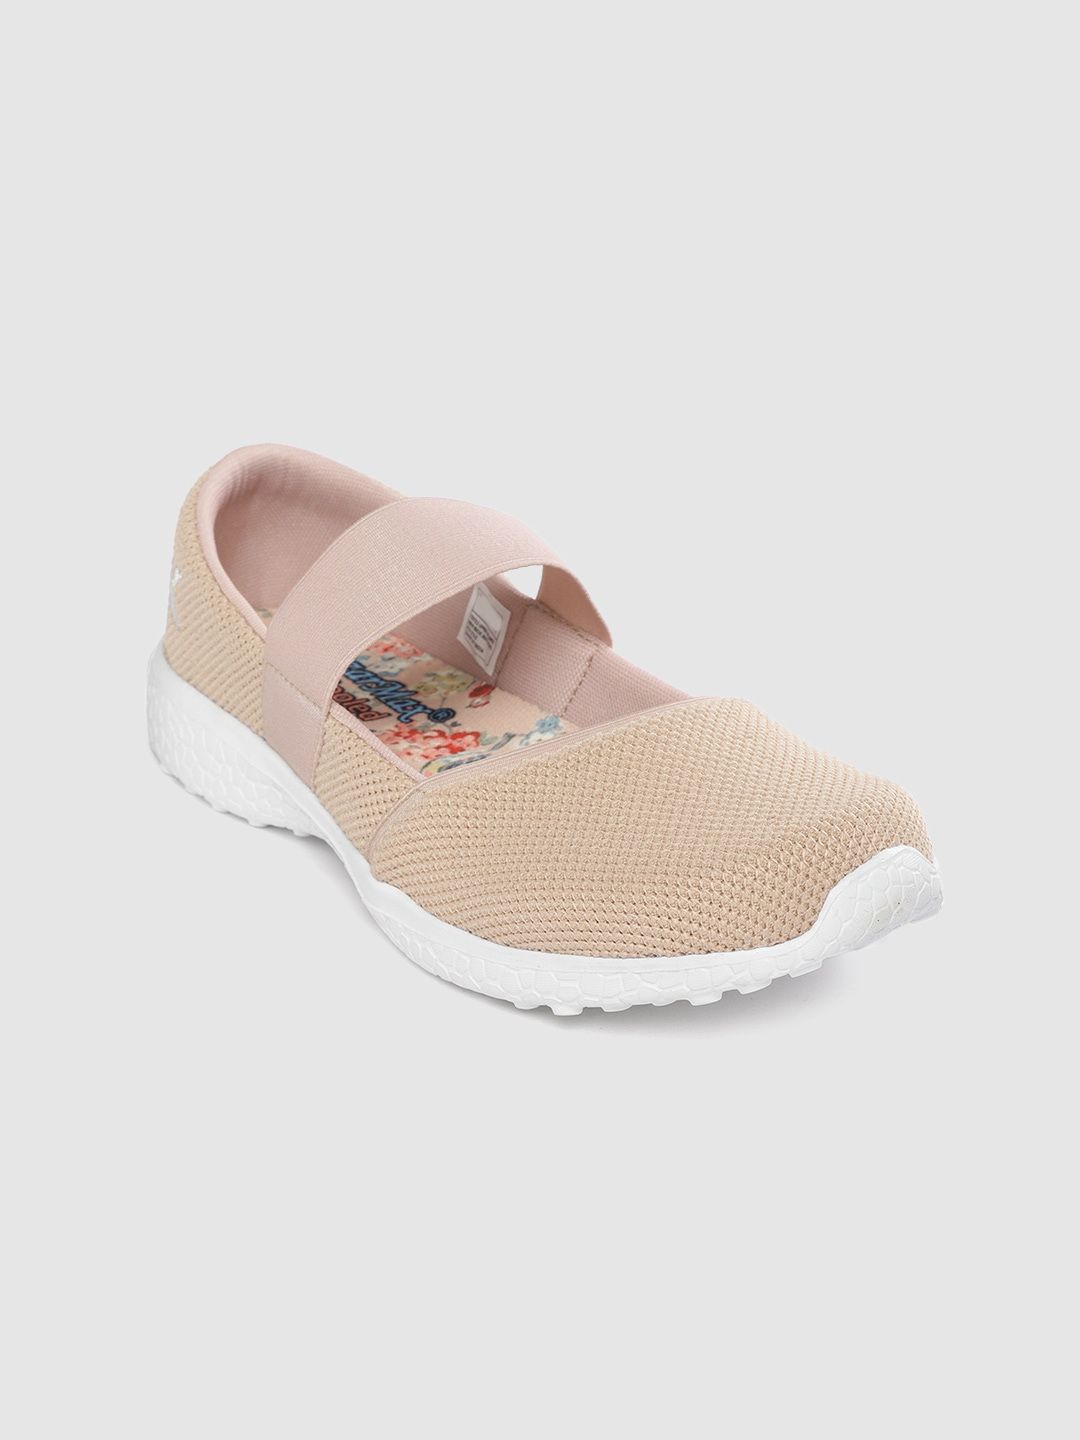 KazarMax Women Peach-Coloured Slip-On Sneakers Price in India